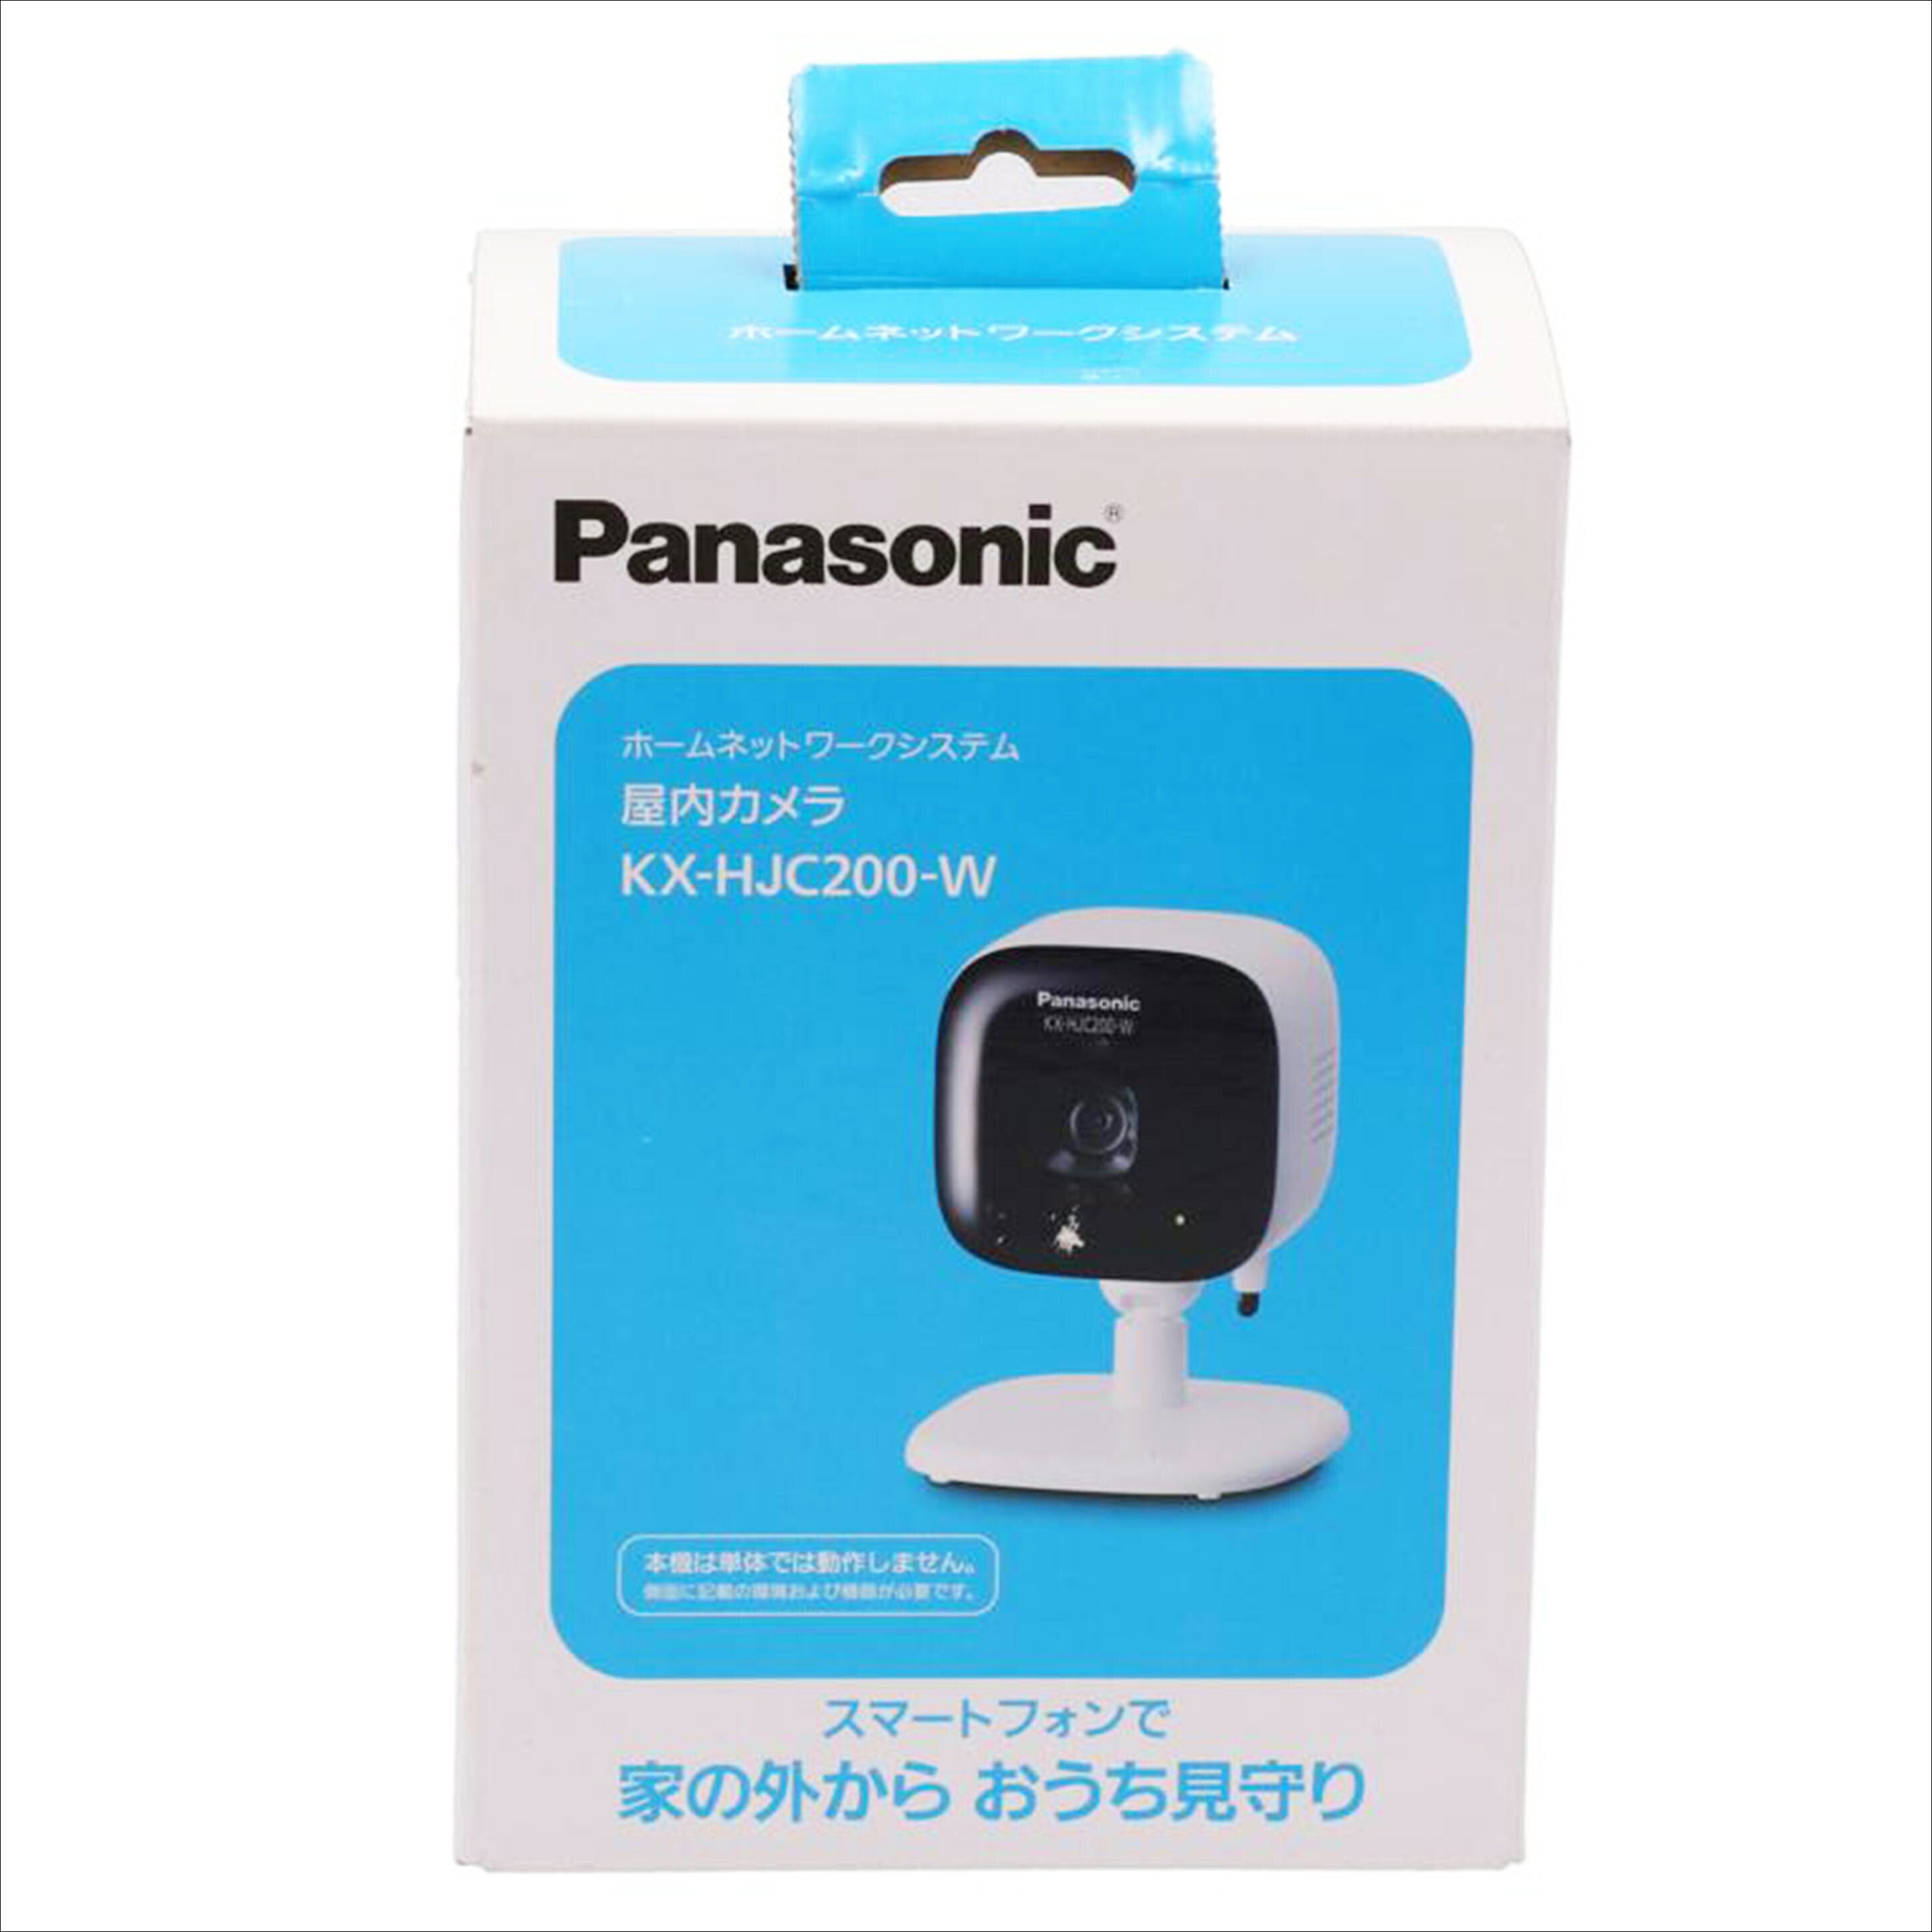 Panasonic KX-HJC200-W